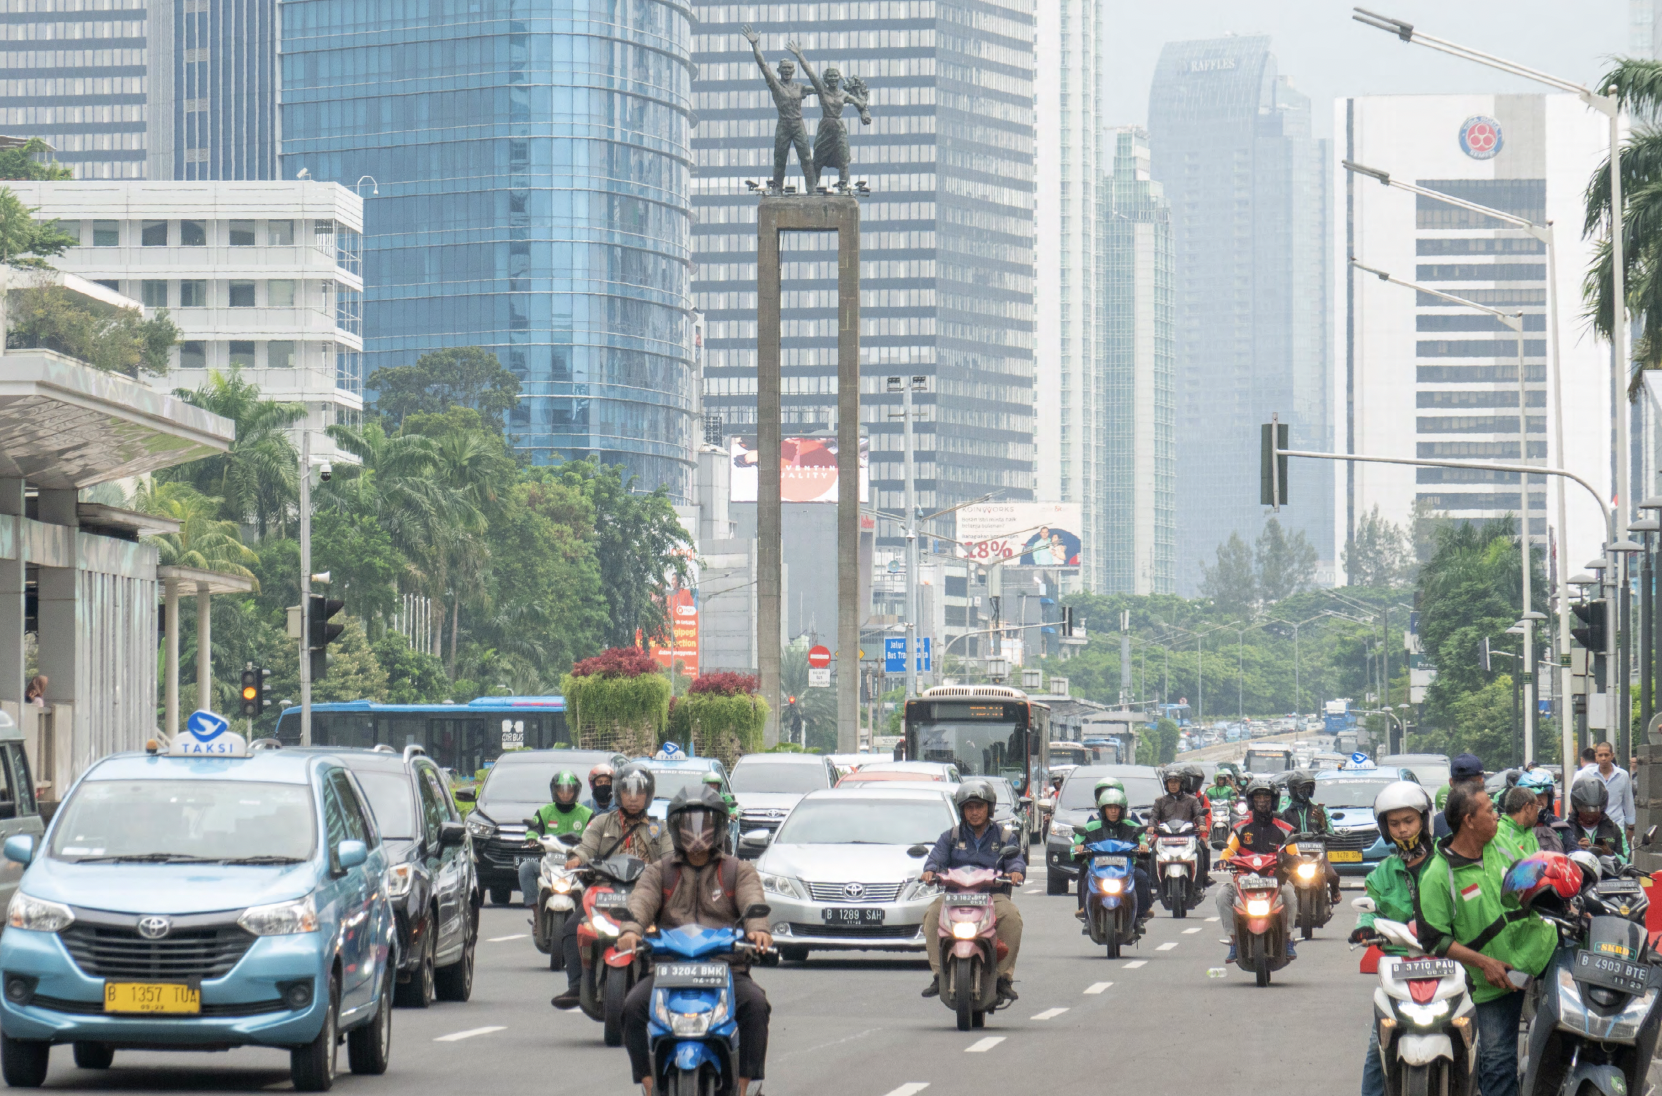 Hazy Jakarta skies by Vital Strategies 2019